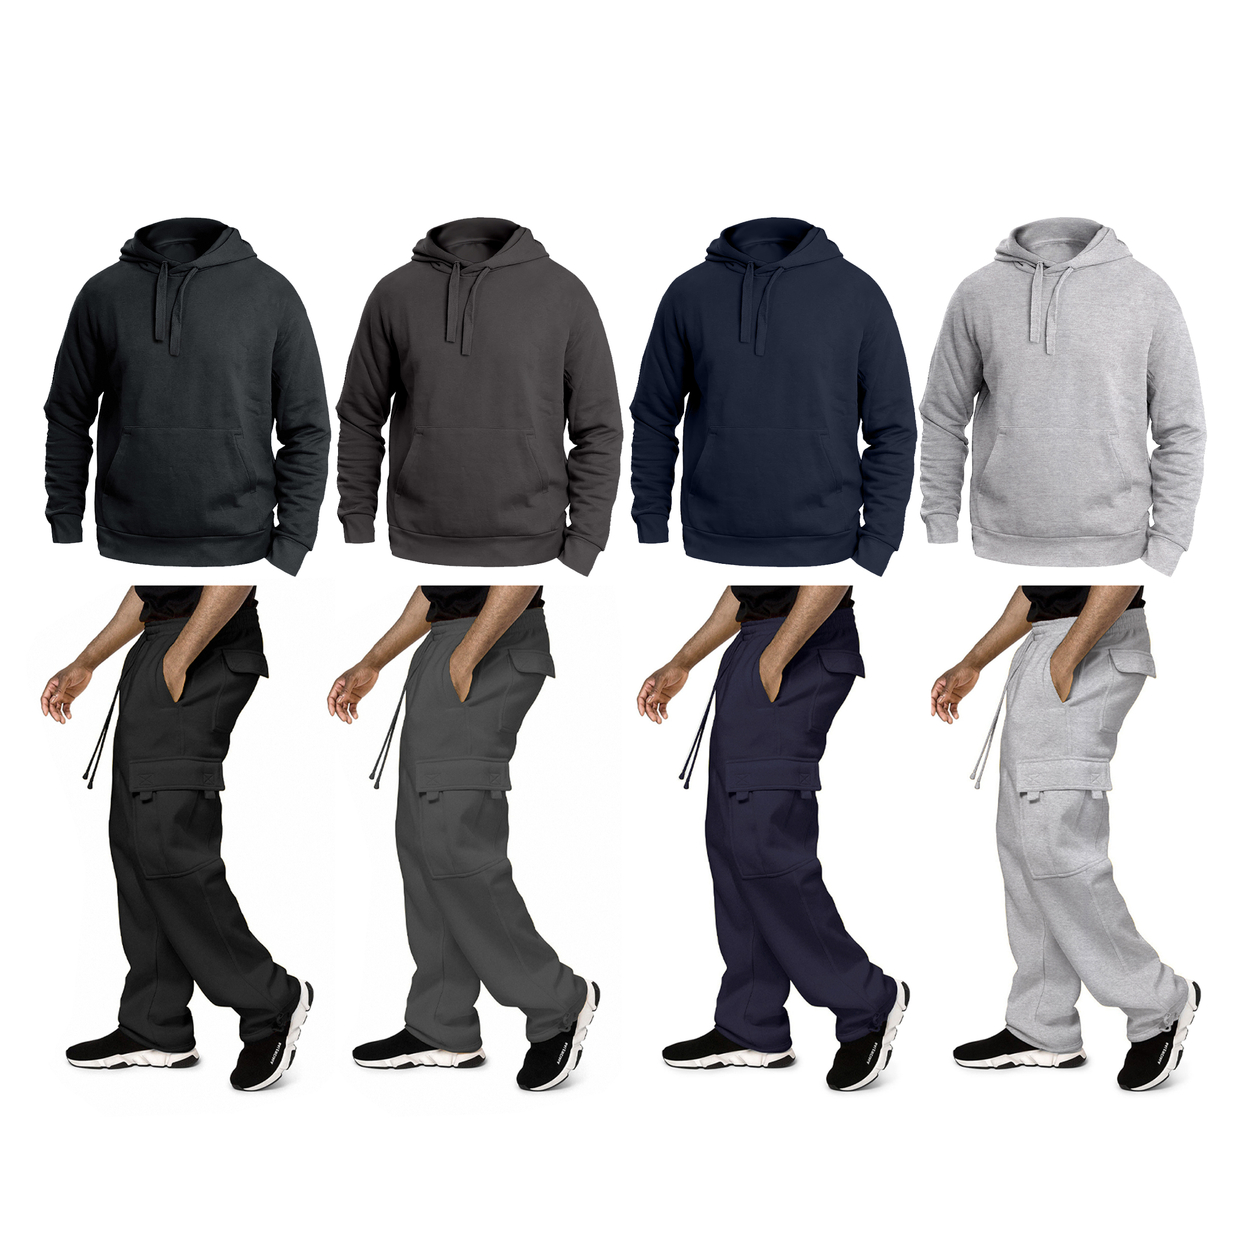 Multi-Pack: Big & Tall Men's Winter Warm Cozy Athletic Fleece Lined Multi-Pocket Cargo Sweatsuit - Grey, 1-pack, 3xl